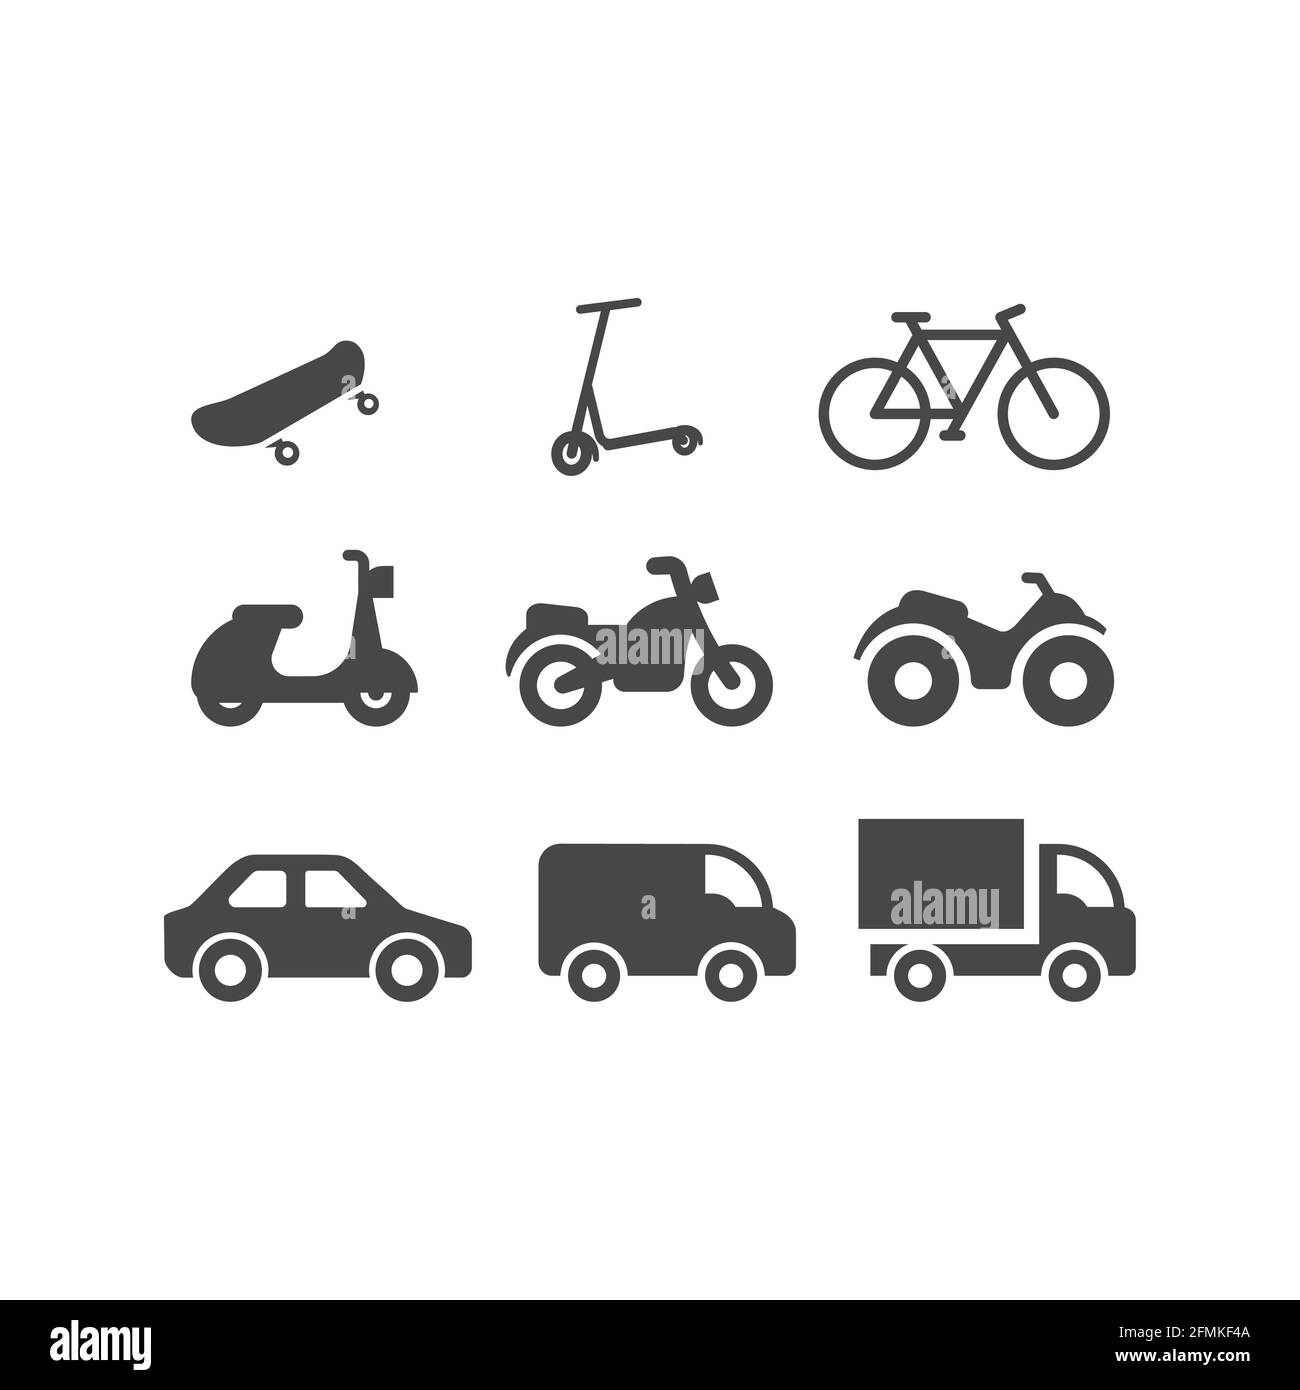 Vektorsymbole für Kraftfahrzeuge, Autos und Lastwagen. Schwarze Symbole für Motorrad, Fahrrad, atv und Roller. Stock Vektor